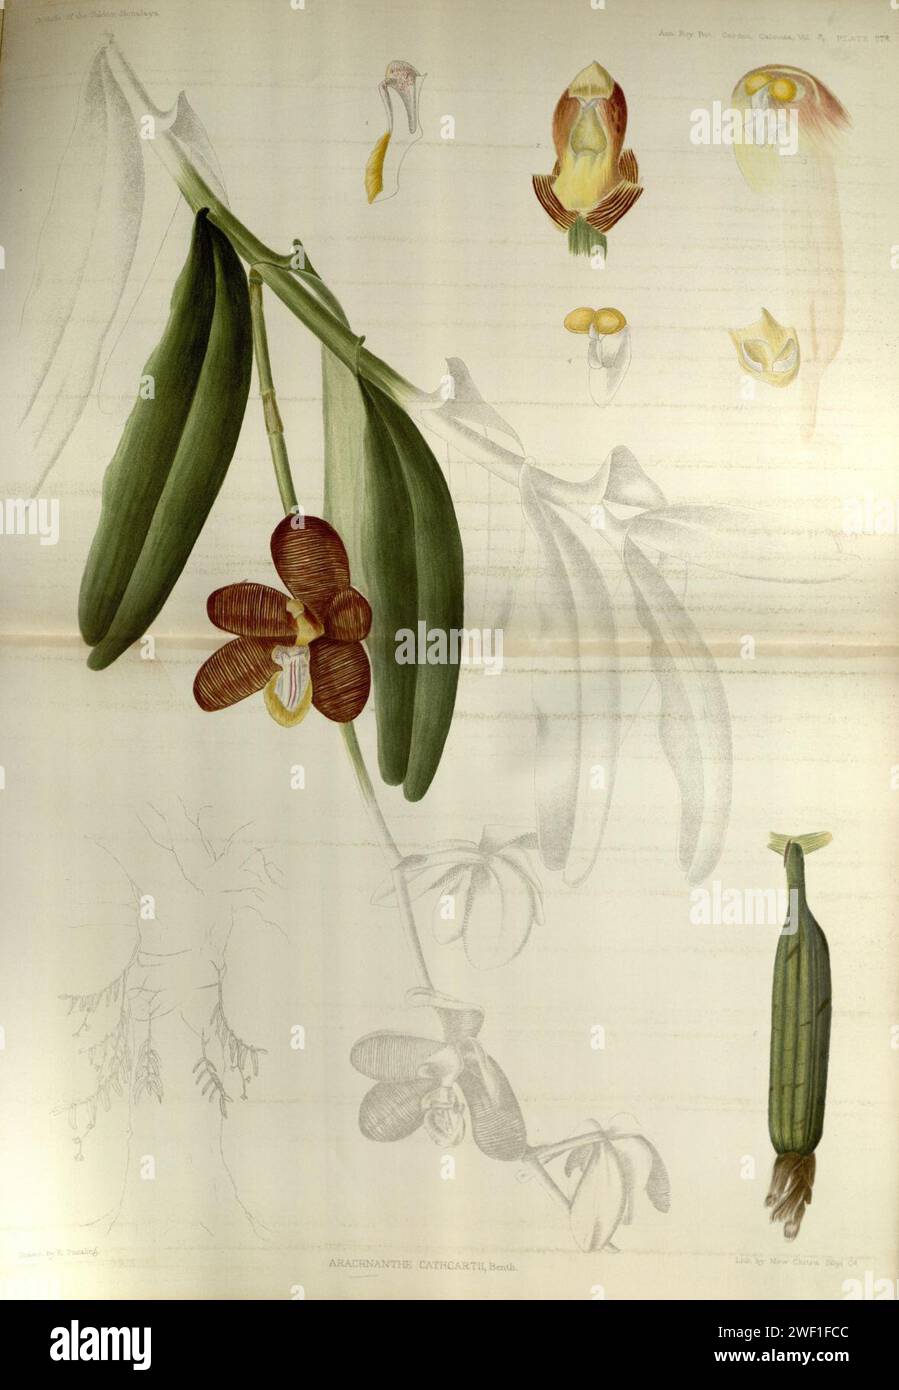 Arachnis cathcartii (as Arachnanthe cathcartii) - The Orchids of the Sikkim-Himalaya pl 278 (1898). Stock Photo